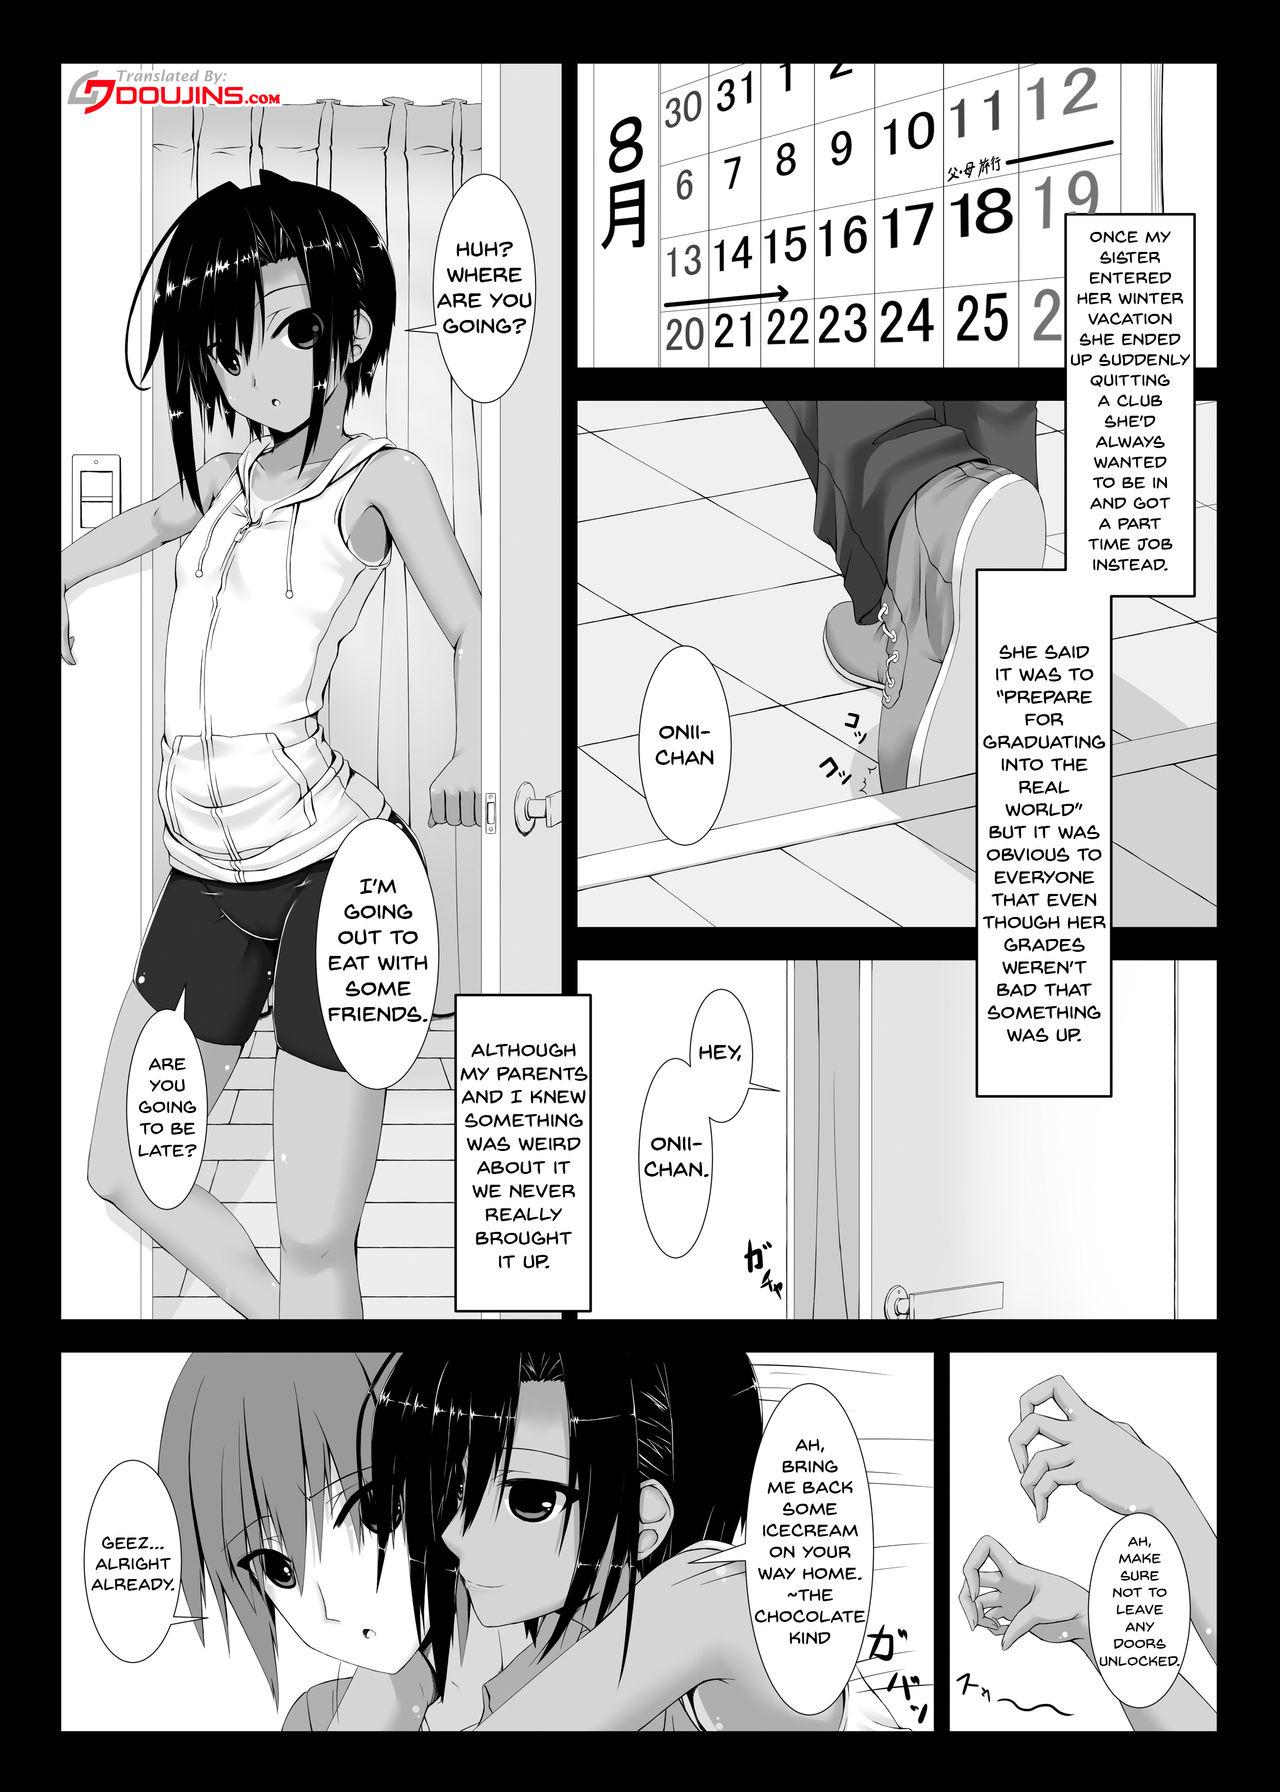 Awesome Kuroneko Choco Ice - Original Climax - Page 2